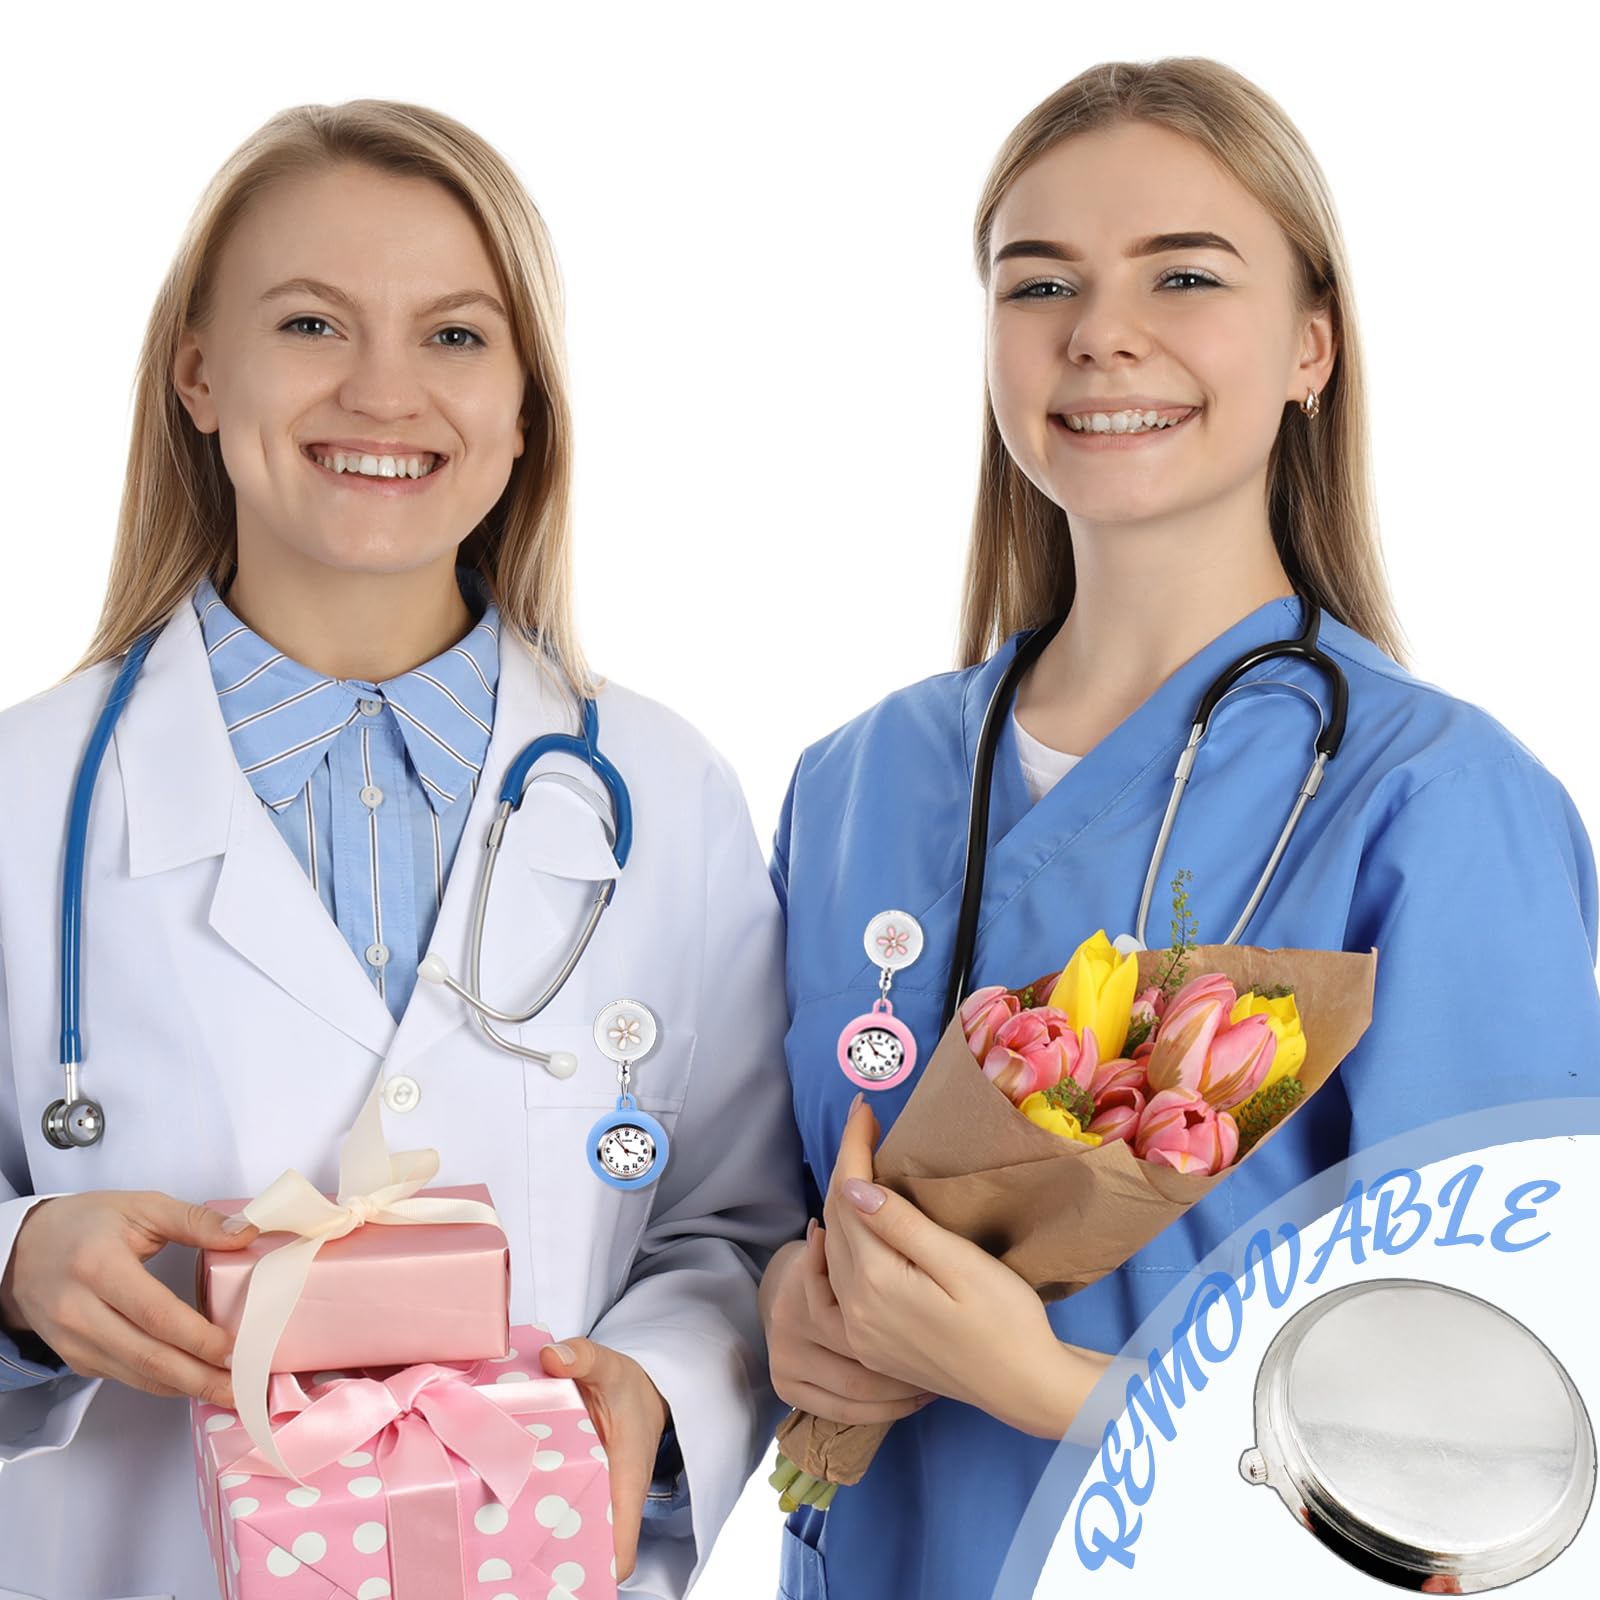 Lragvtbk 2 Pcs Retractable Nurse Watch for Nurses Student Gifts Clip Watch Nurse Badge Accessories